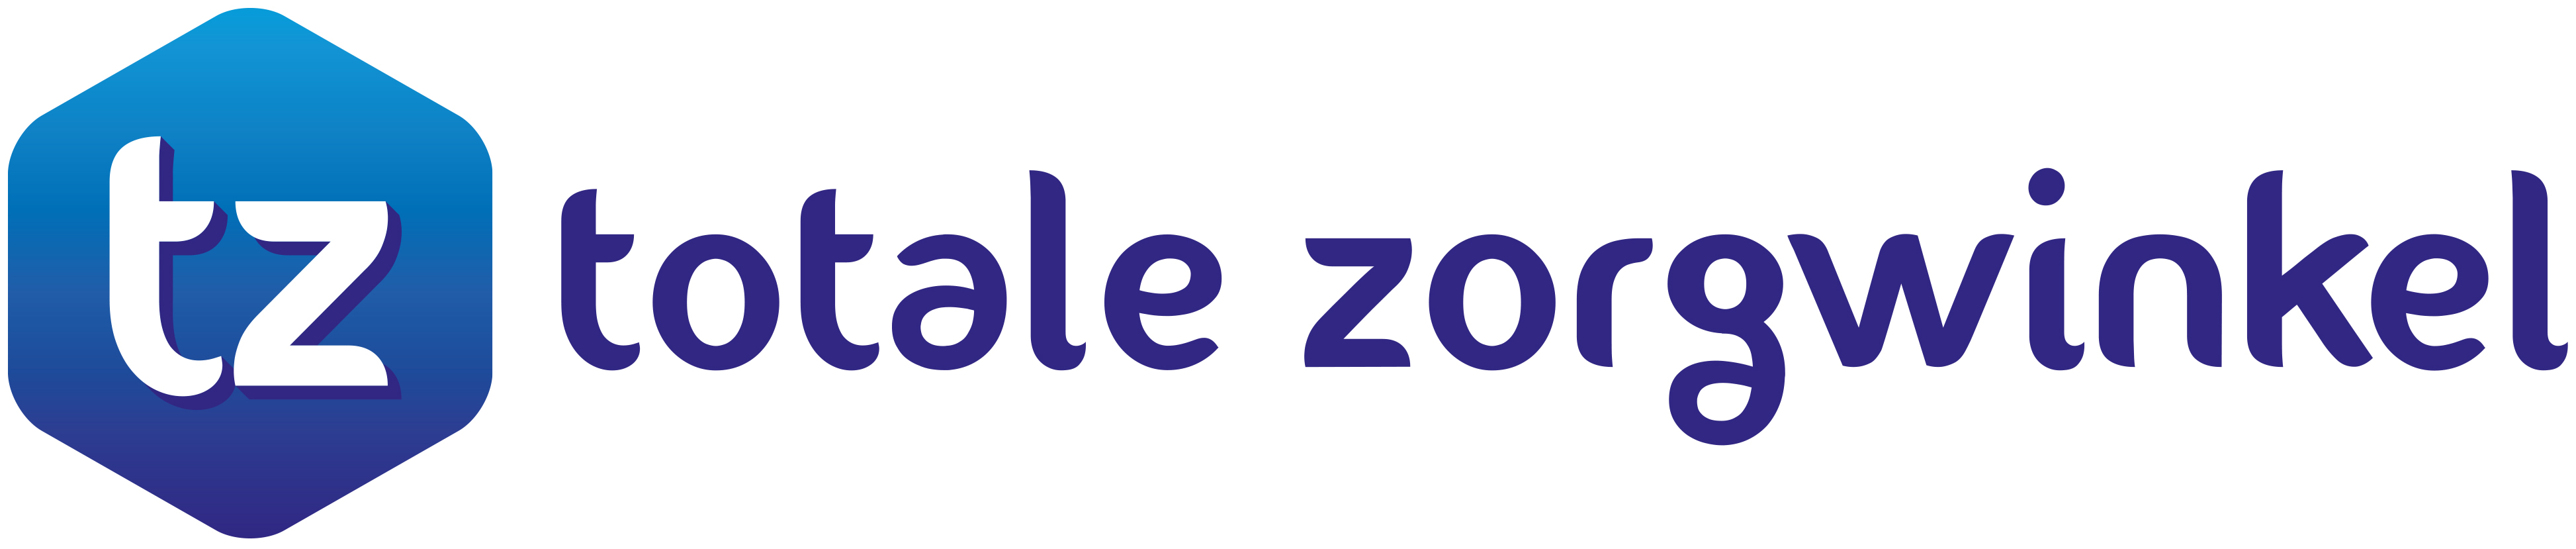 TotaleZorgwinkel_logo